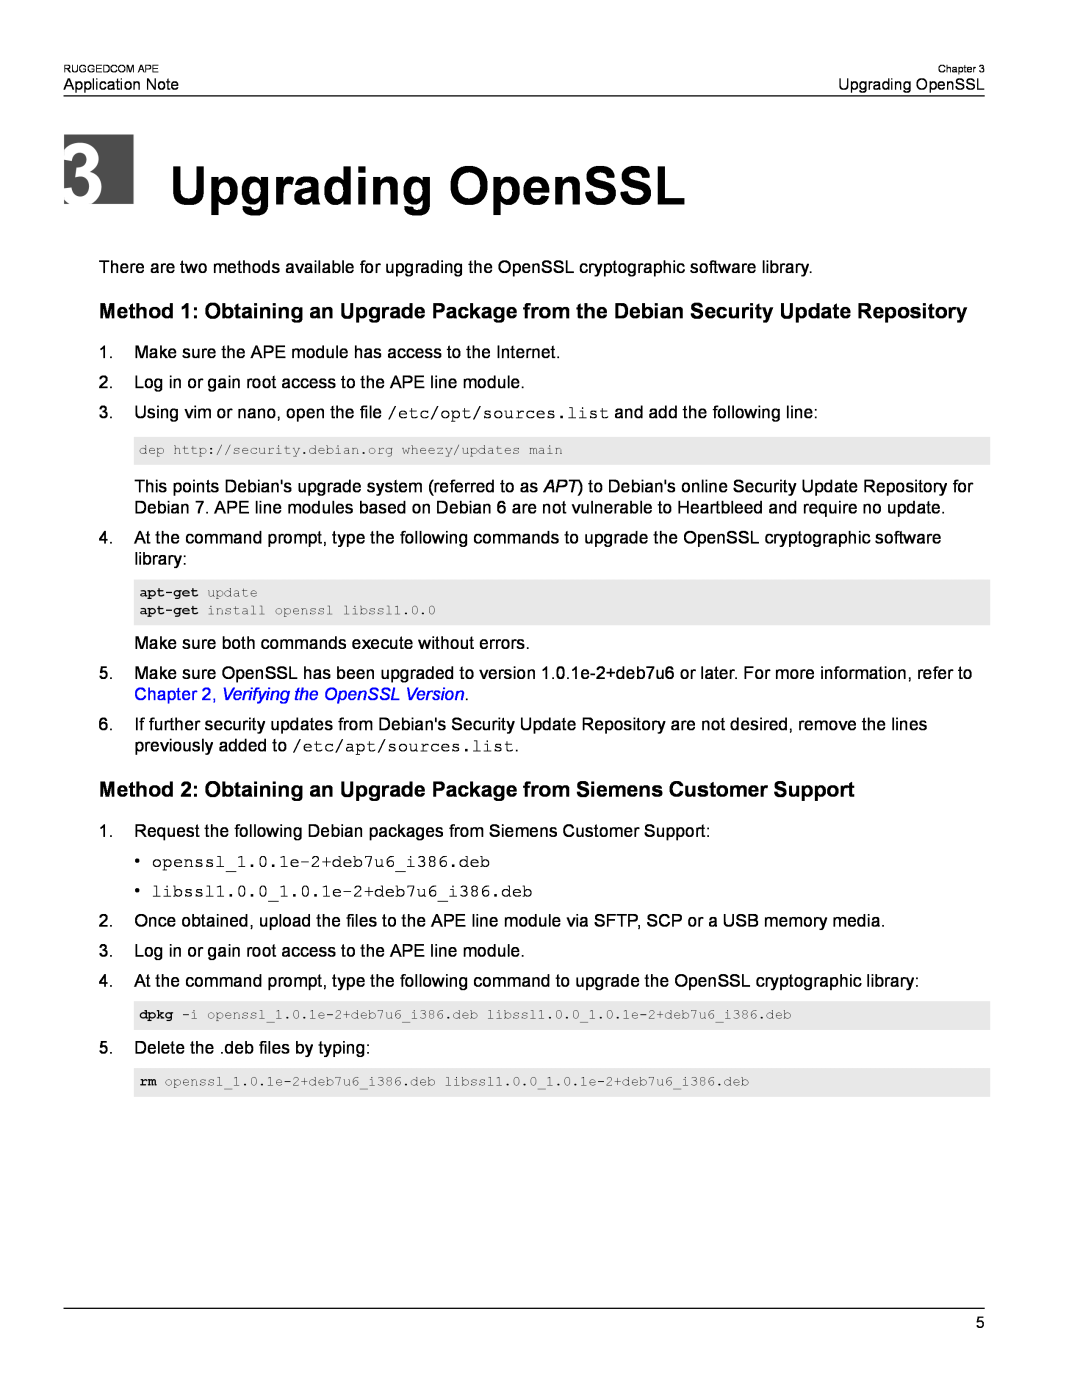 Siemens AN25 manual Upgrading OpenSSL 